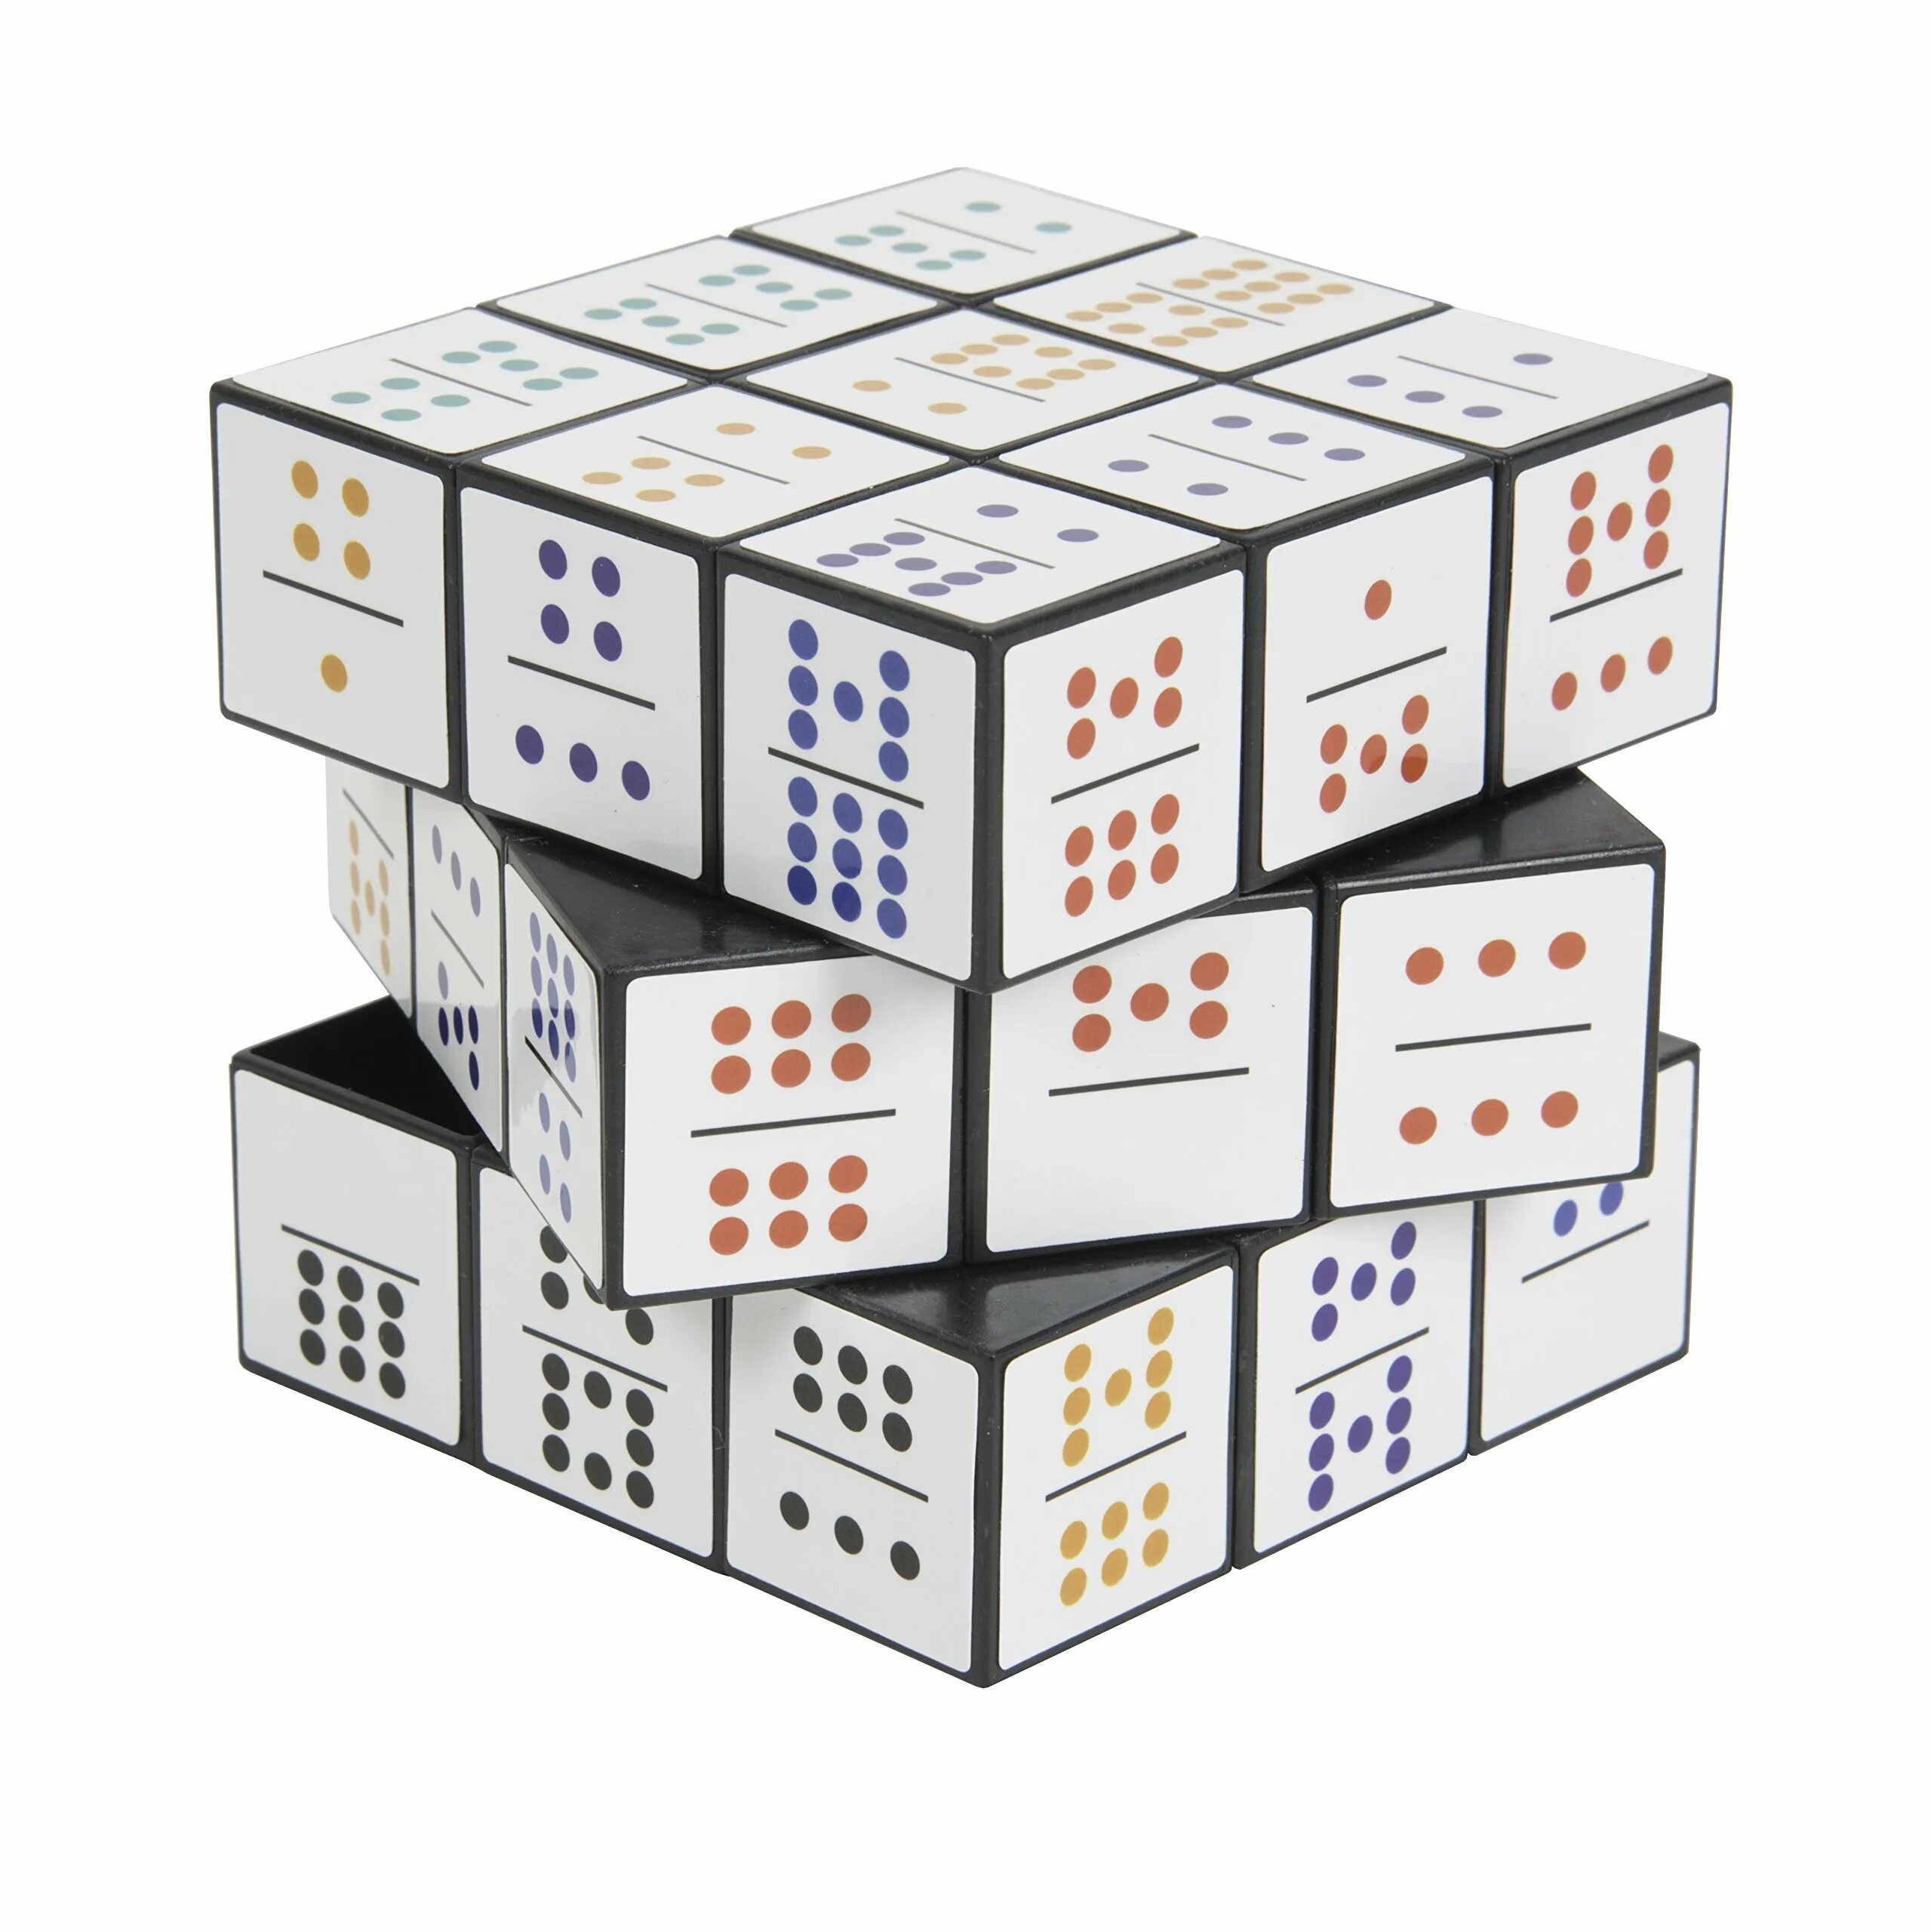 Cube 250 Домино. Головоломка магический куб Тетрис. Кубик Рубика Домино СССР. Наклейки на кубик Рубика судоку. Включи куб 5